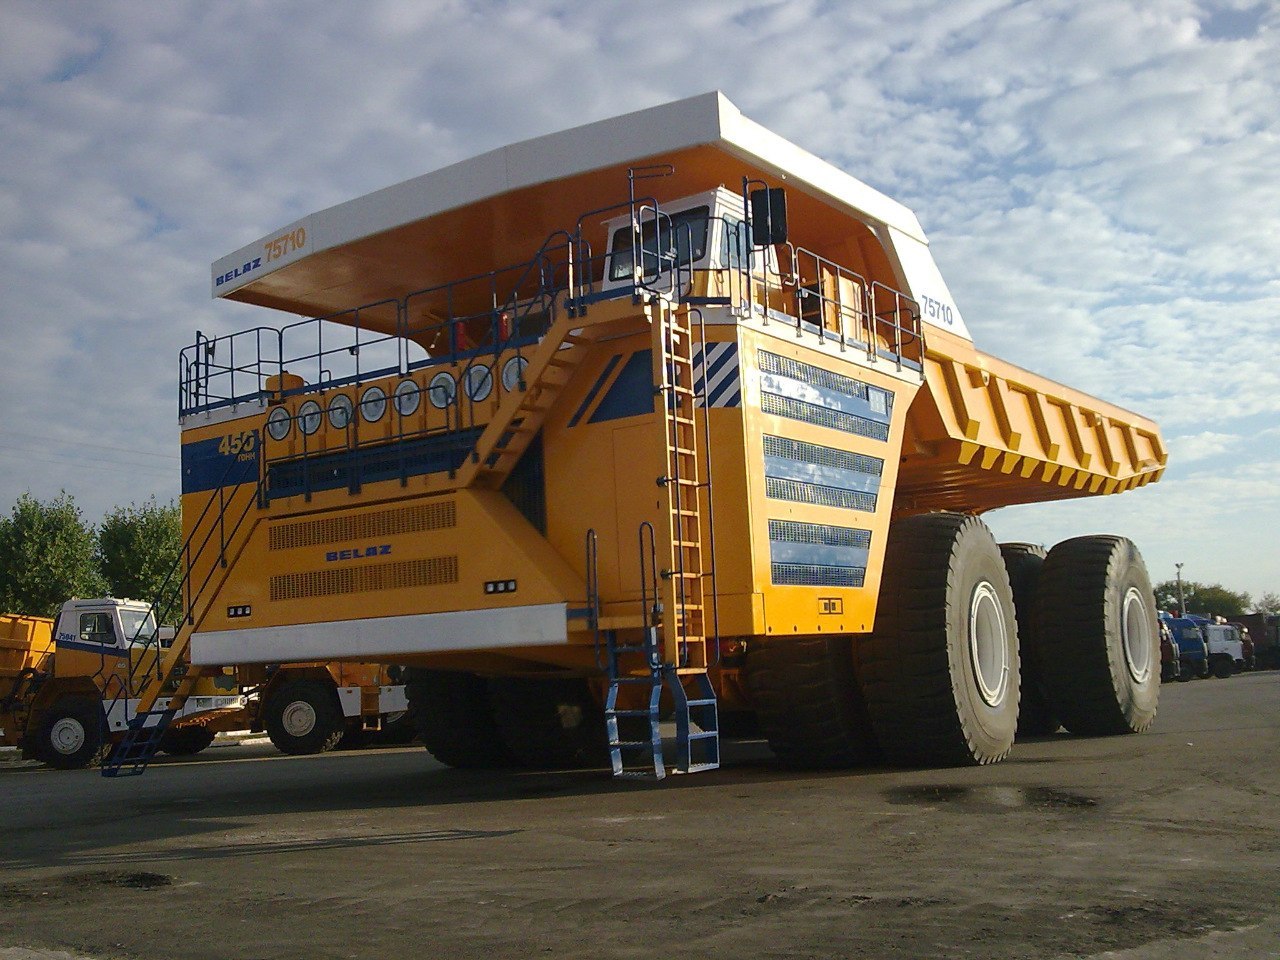 BelAZ rolls out worlds largest dump truck